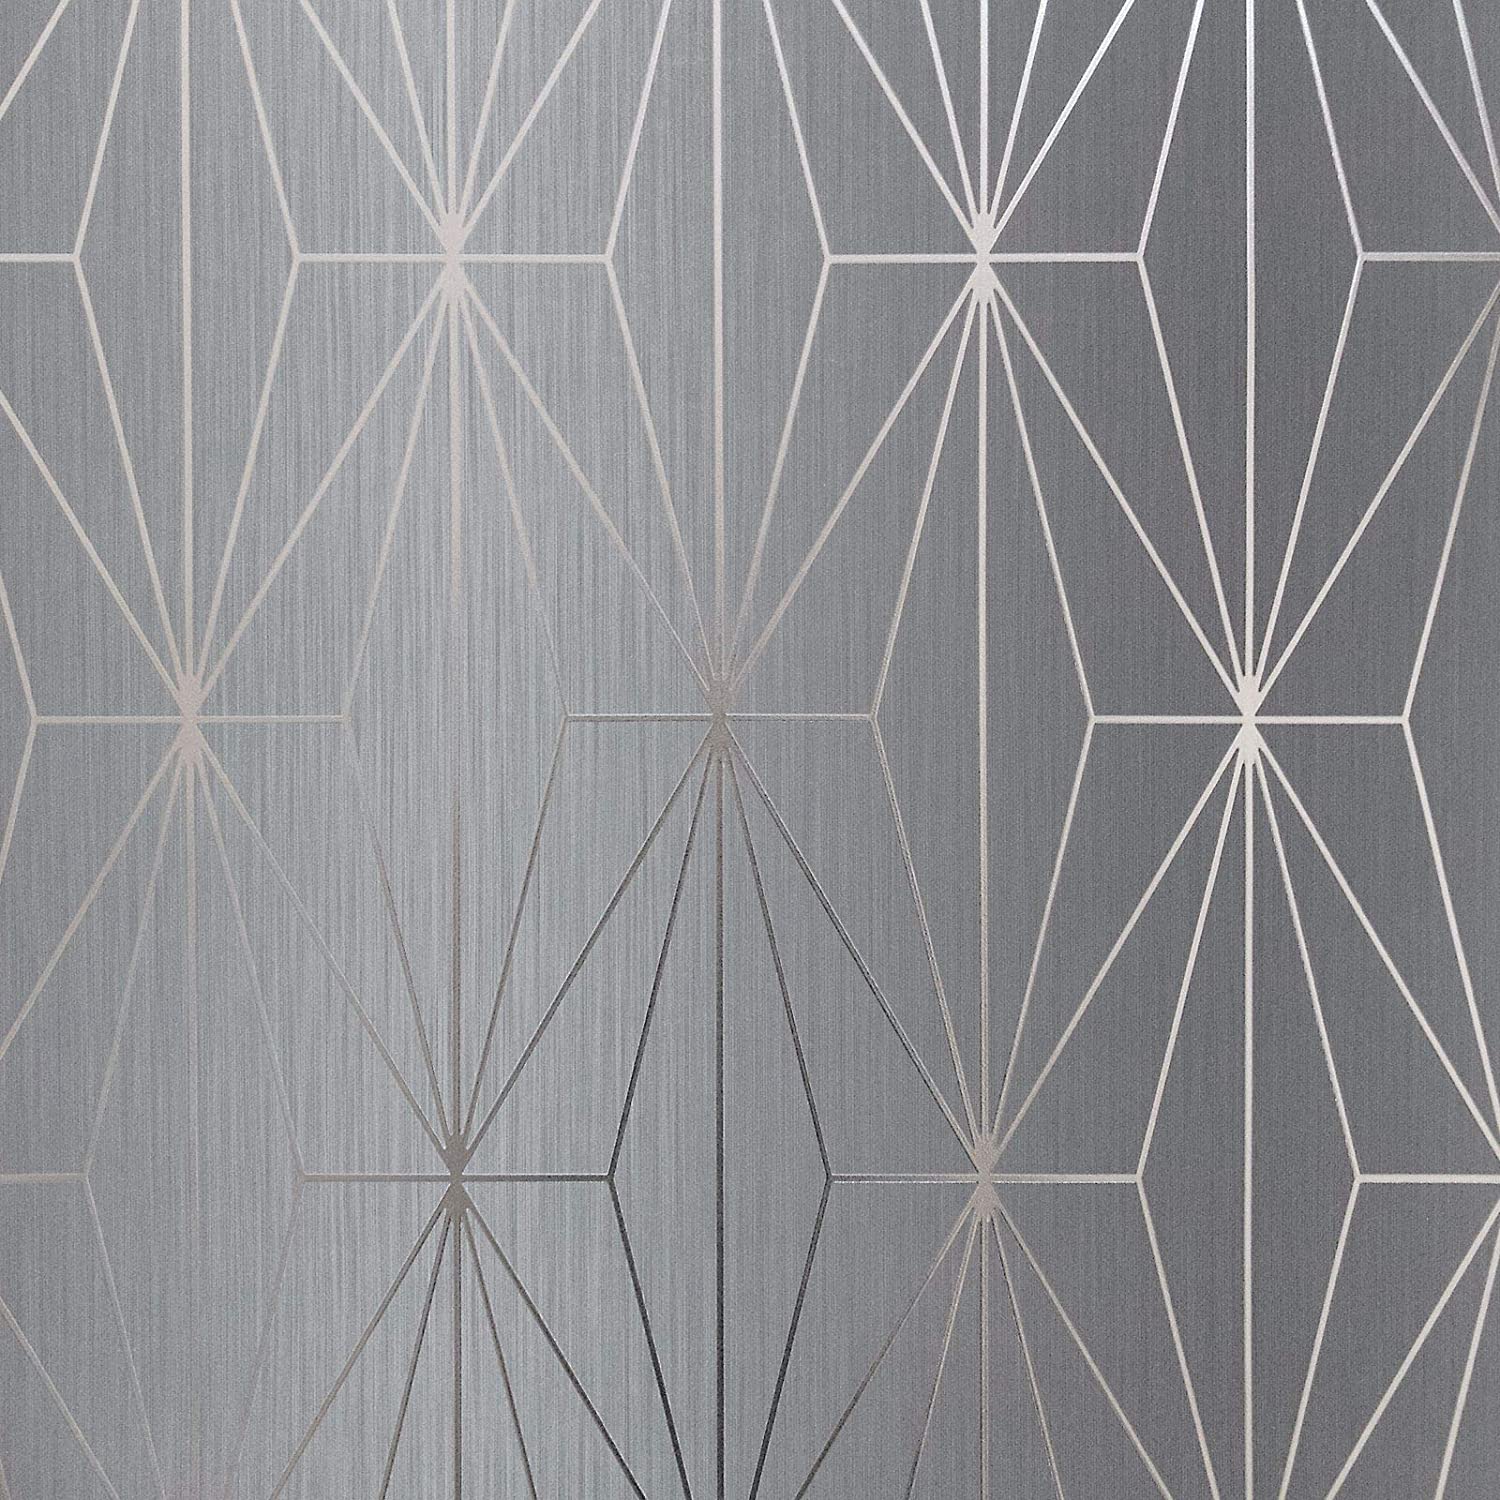 Metallic Geometric Wallpapers 4k HD Metallic Geometric Backgrounds 